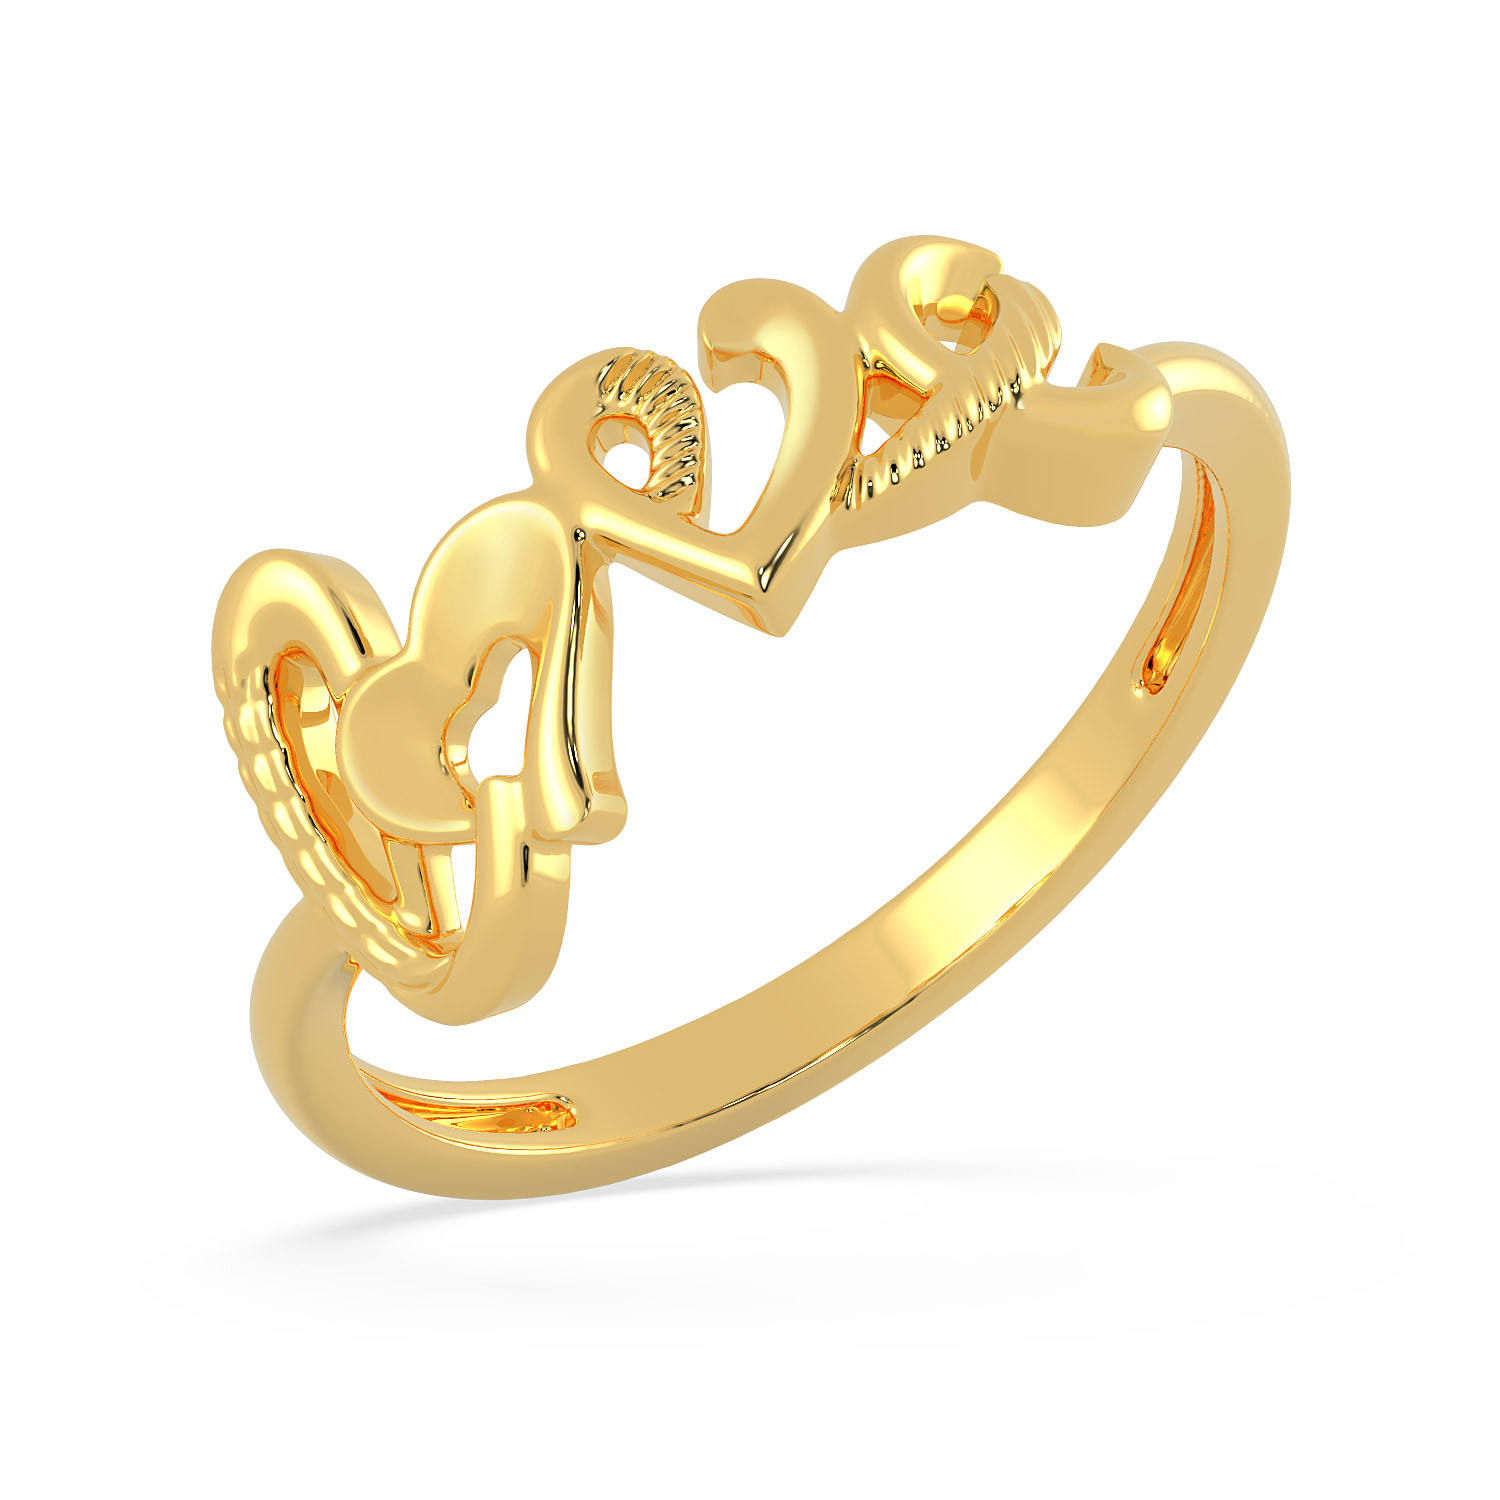 Malabar 22 KT Gold Studded Casual Ring FRSKYDZ113